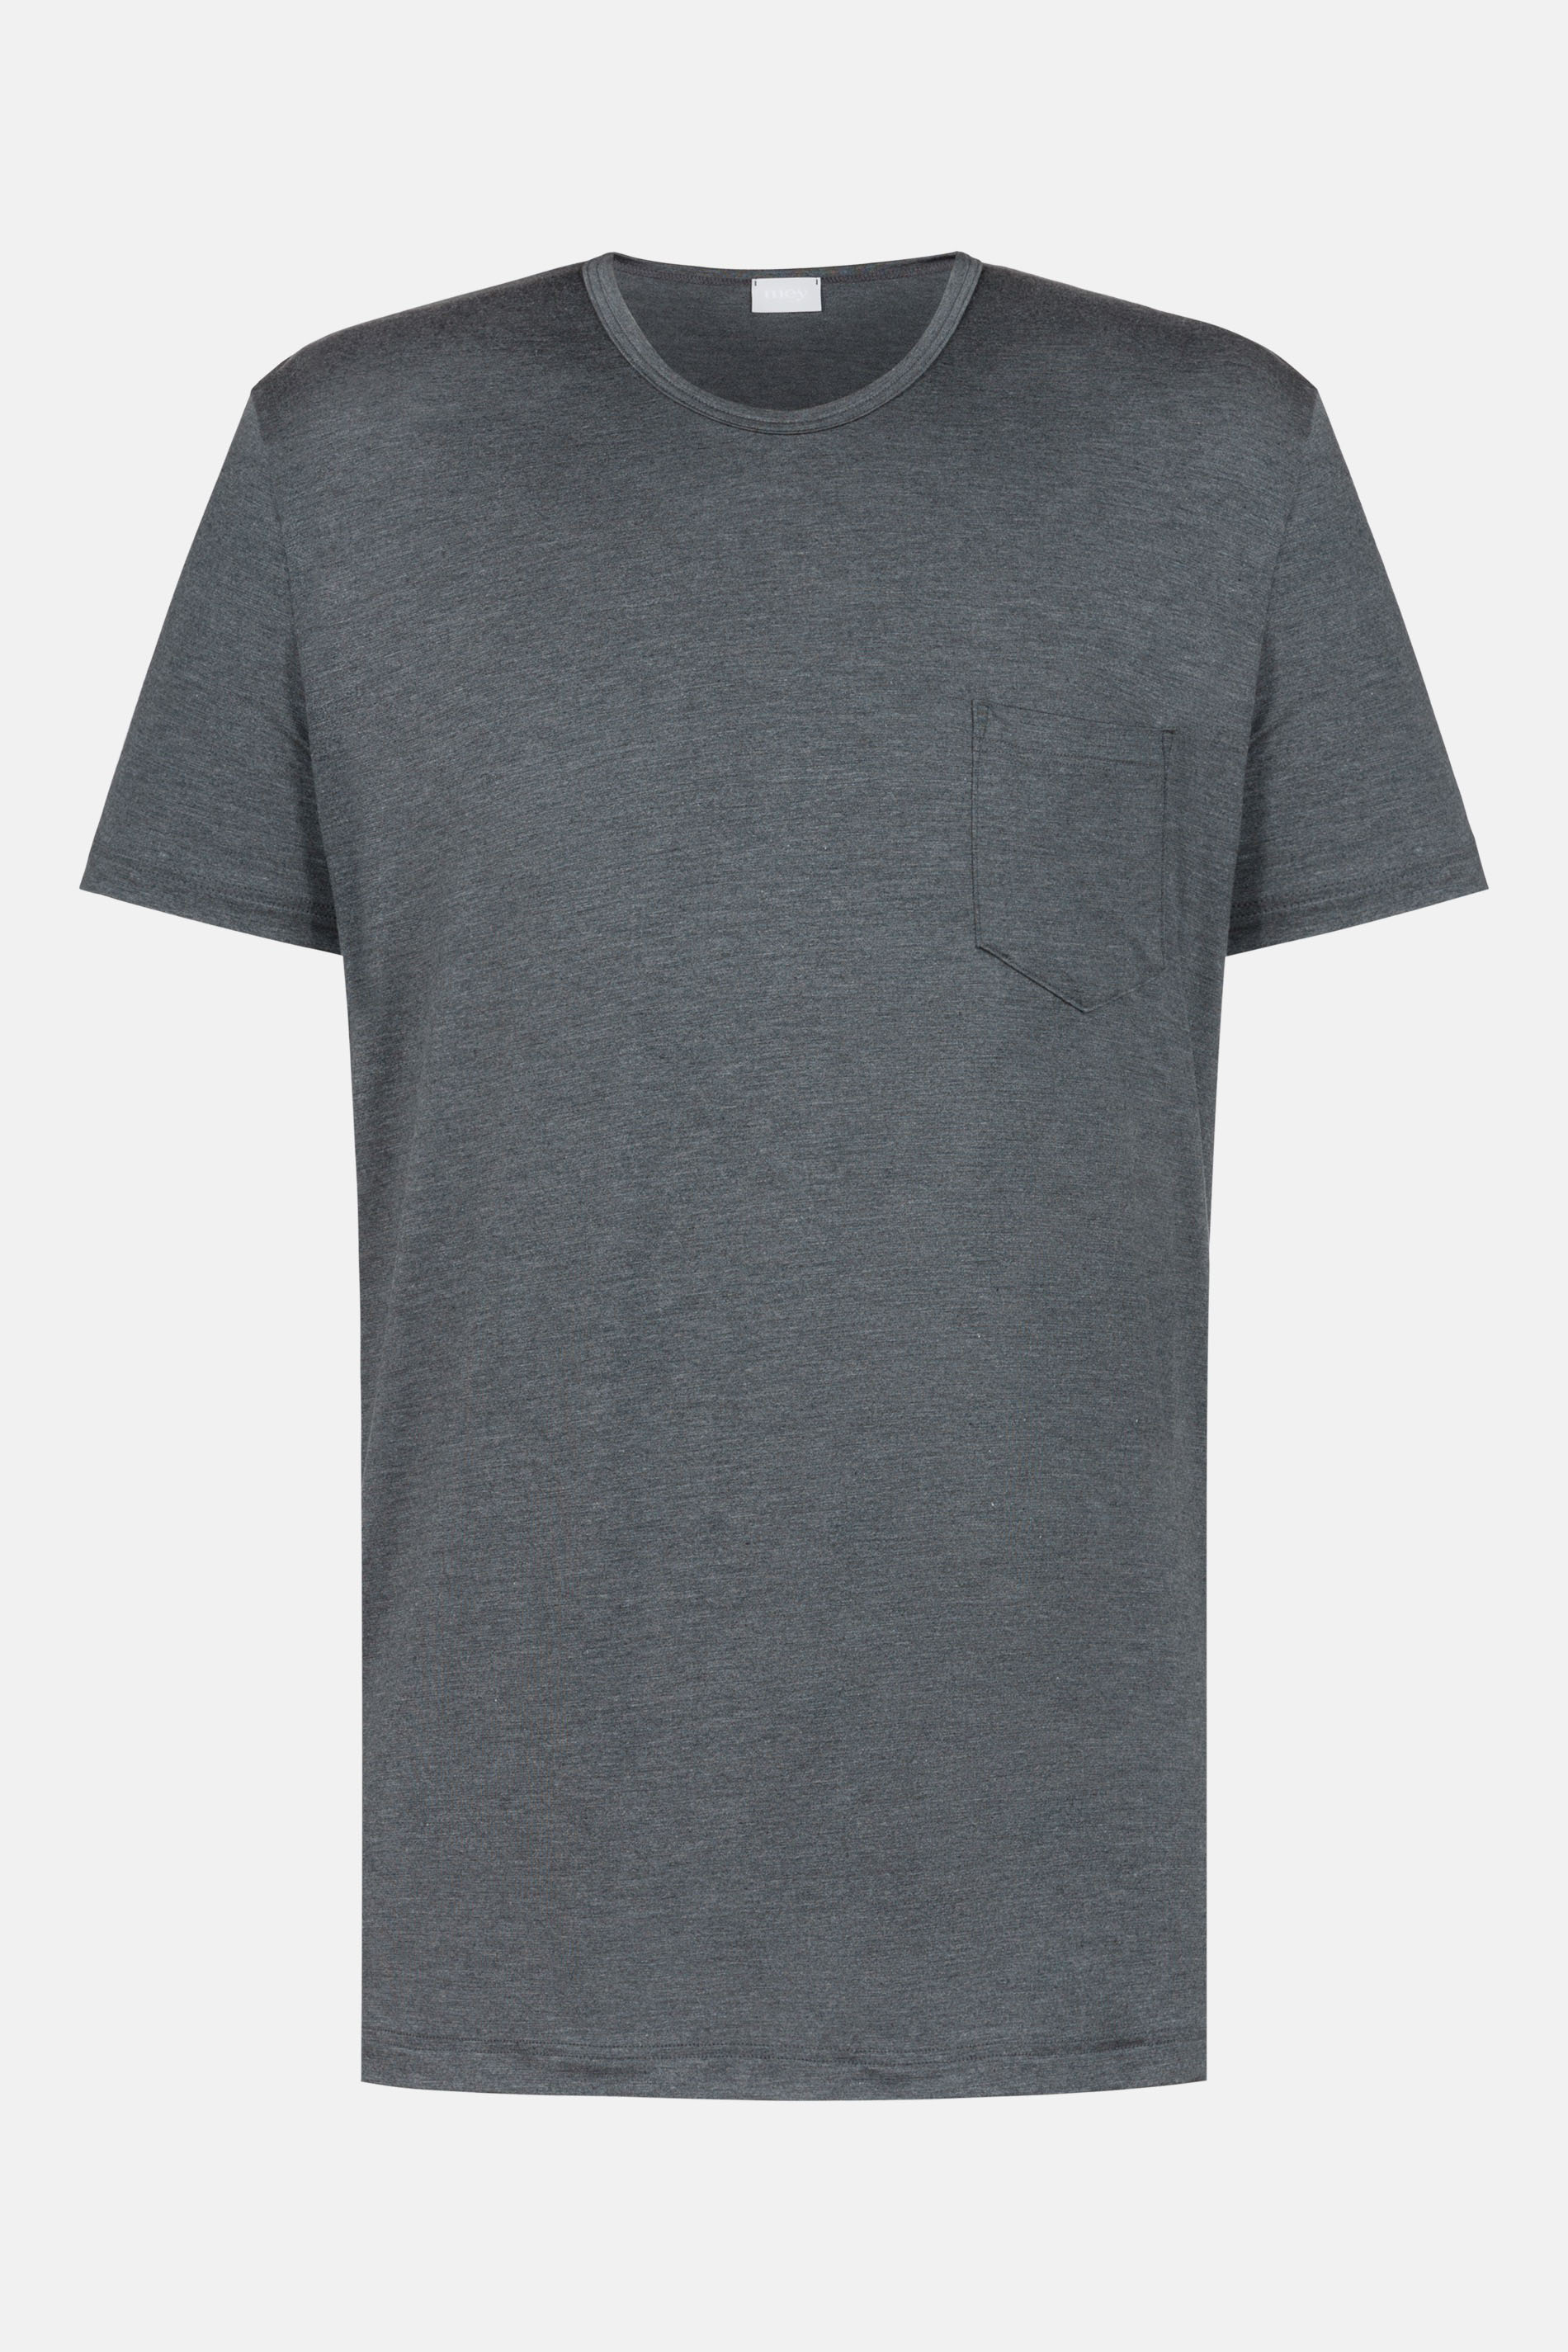 T-Shirt Serie Inverness Freisteller | mey®